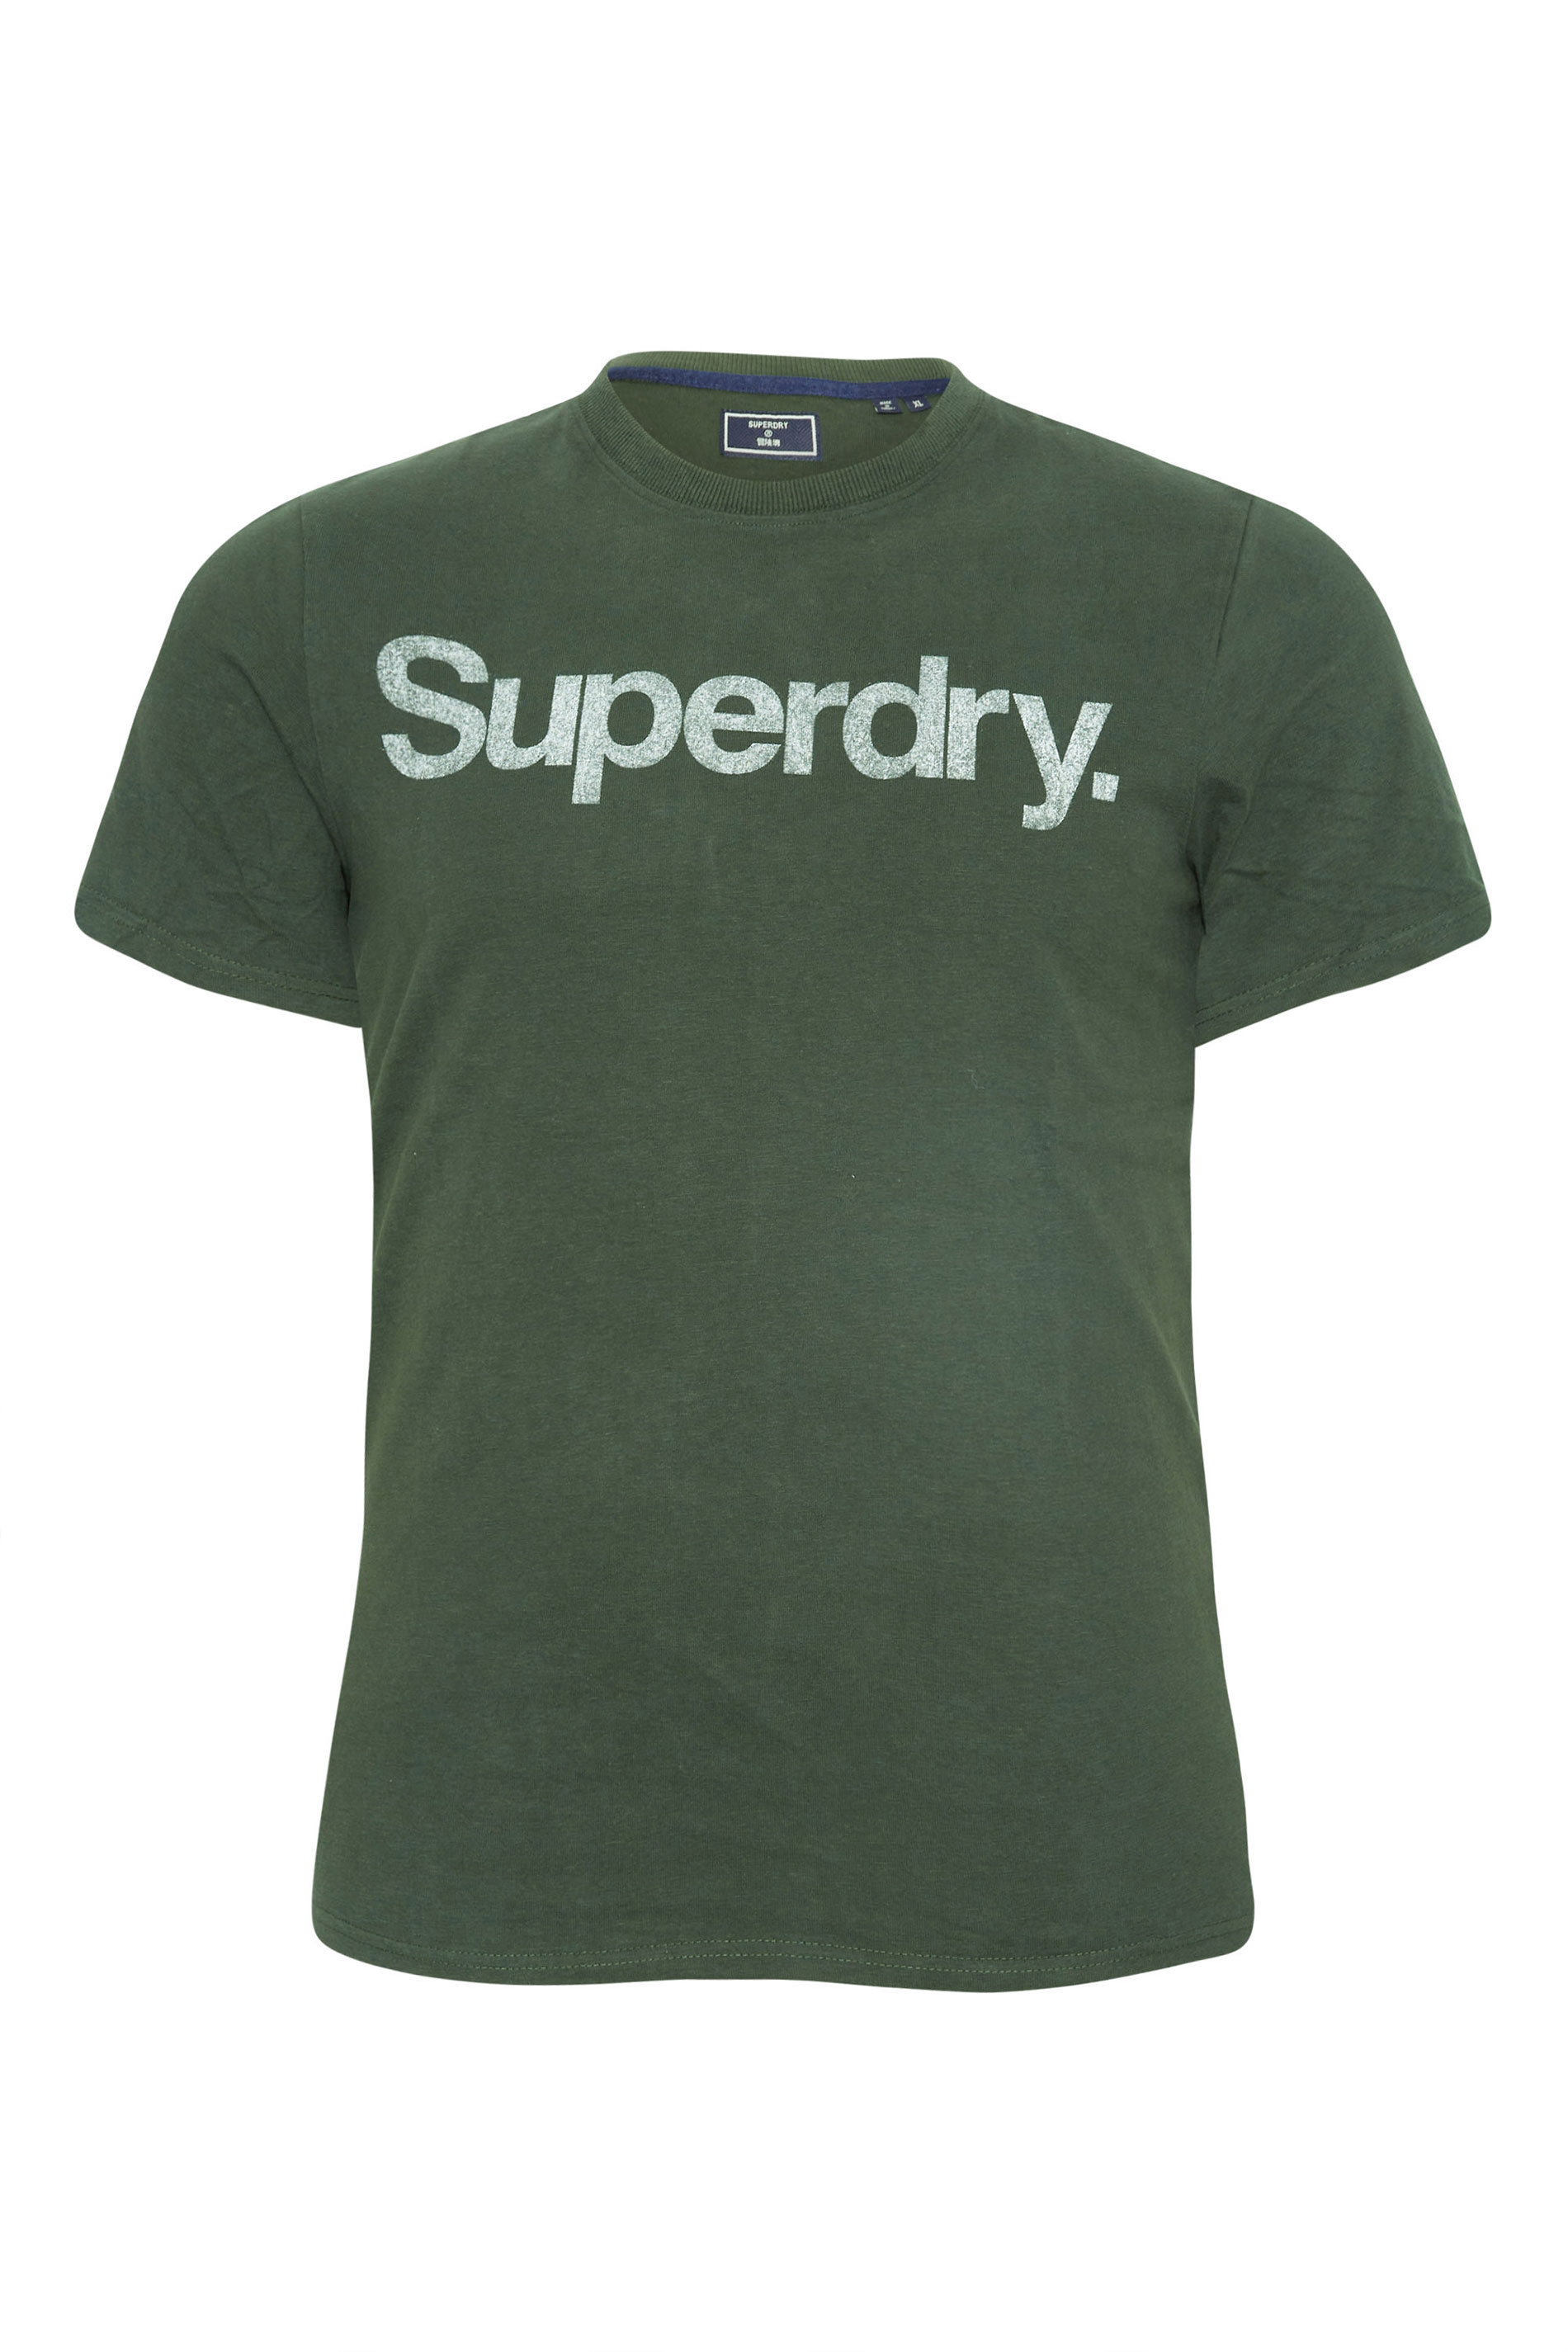 SUPERDRY Big & Tall Khaki Green Vintage Logo T-Shirt_X.jpg